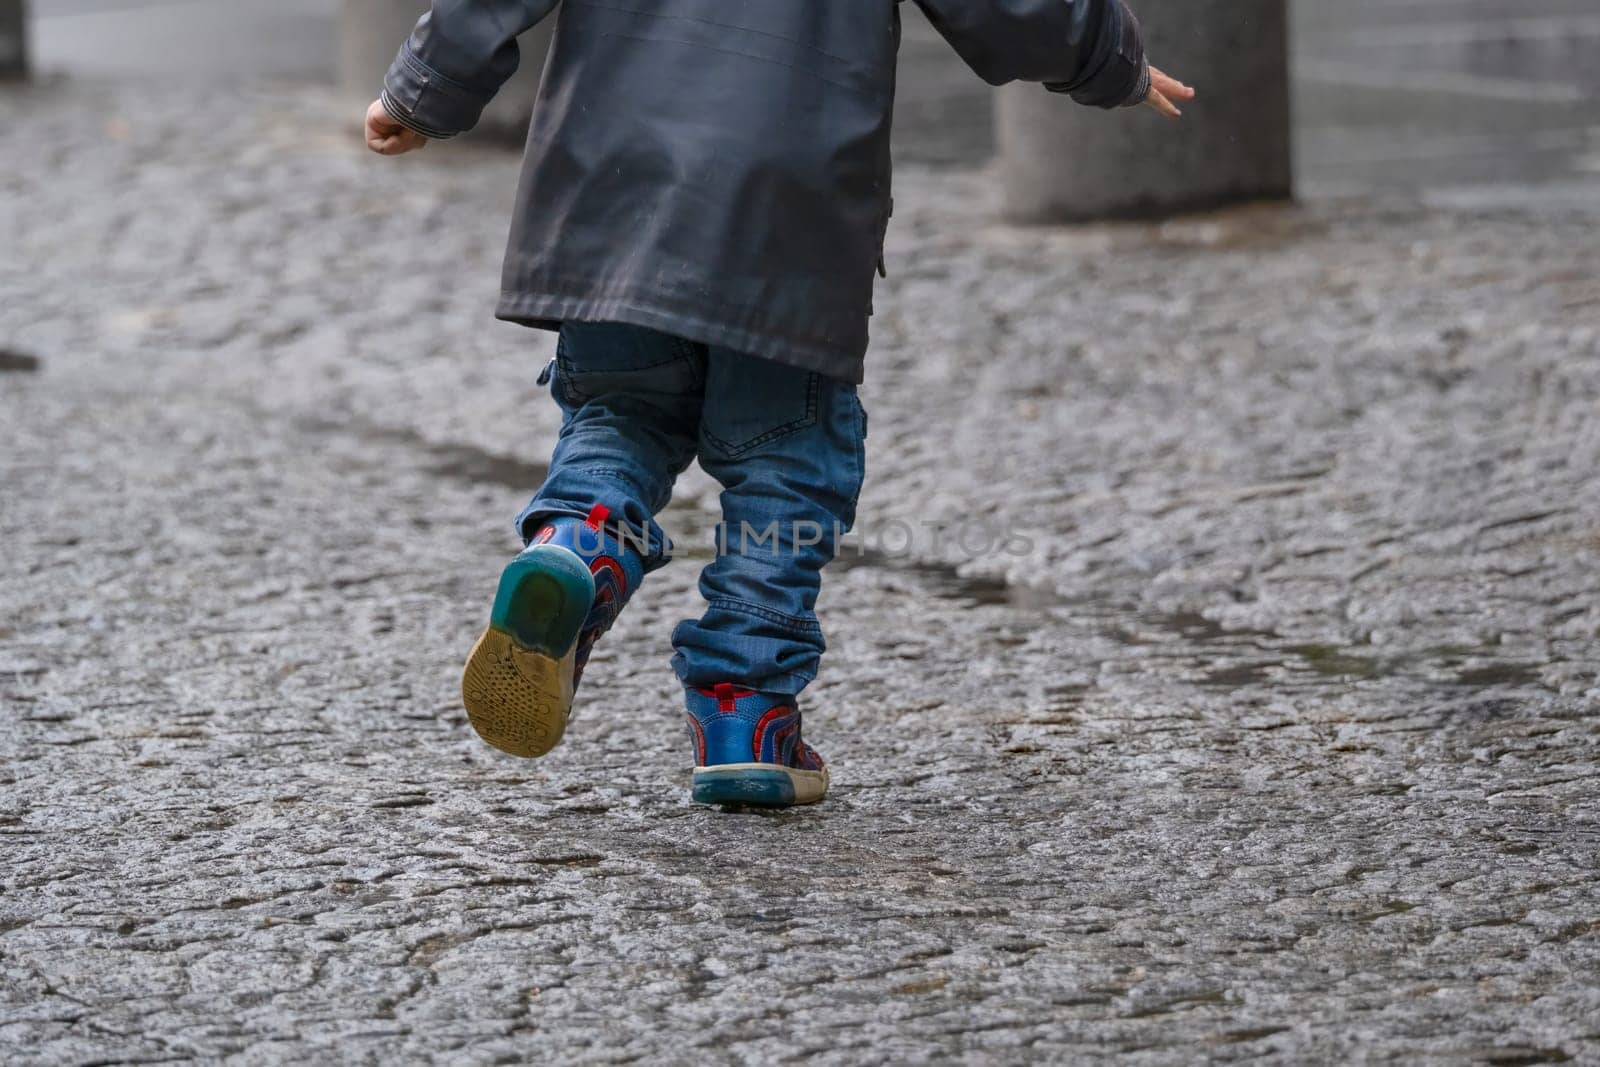 Boy running in rain on downtown cobblestone street. by bRollGO